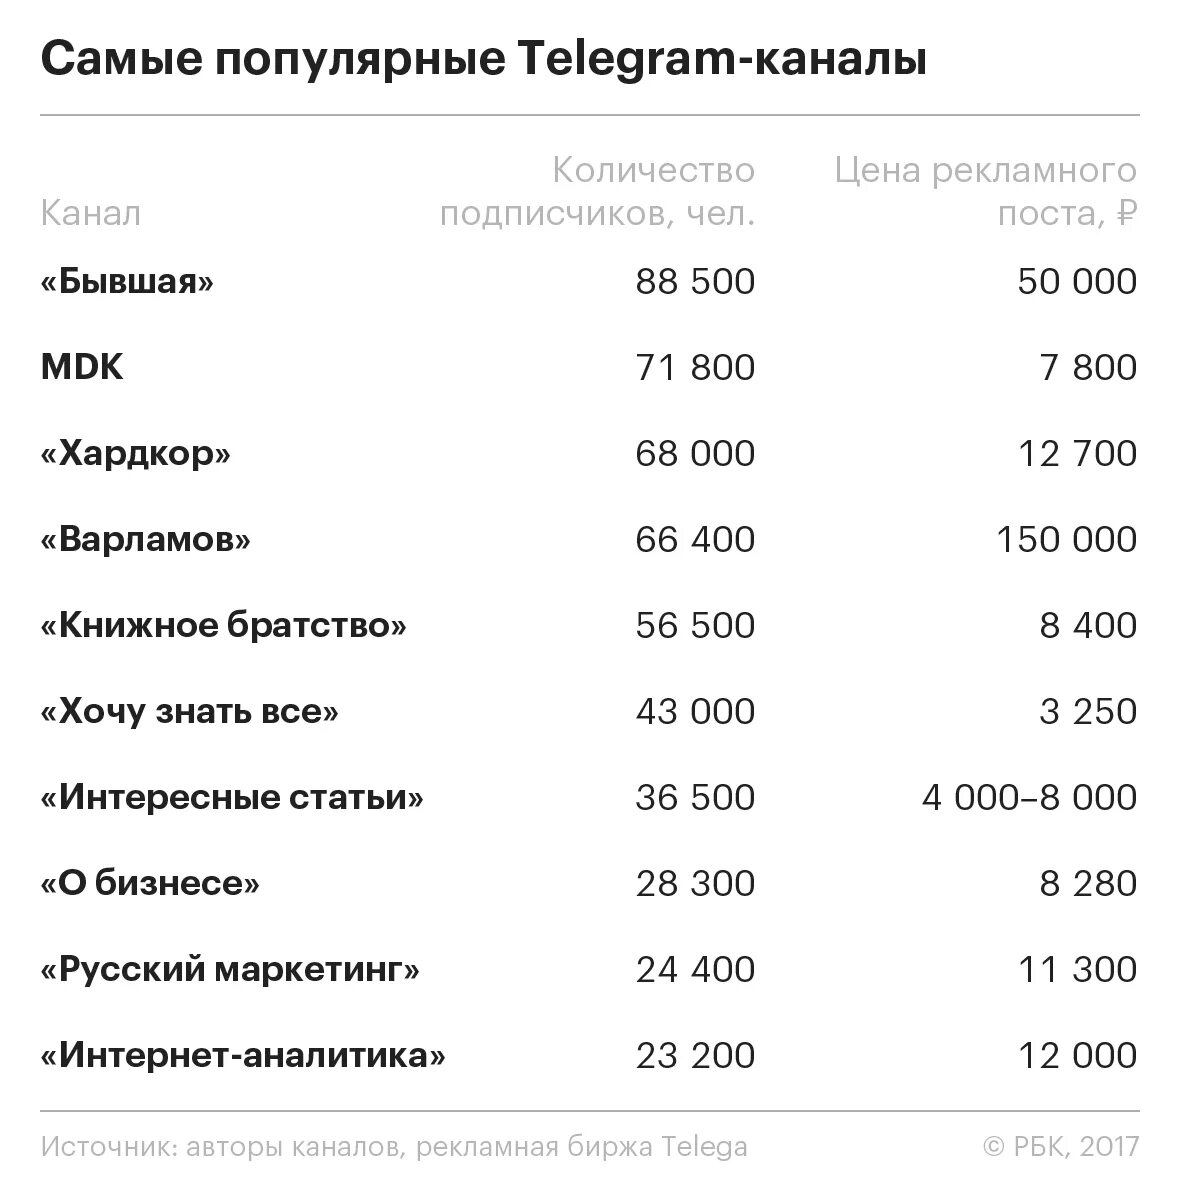 Самый популярный Telegram канал. Популярные телеграм каналы. Самые популярные телеграм каналы. Популярныемканалы телеграм.